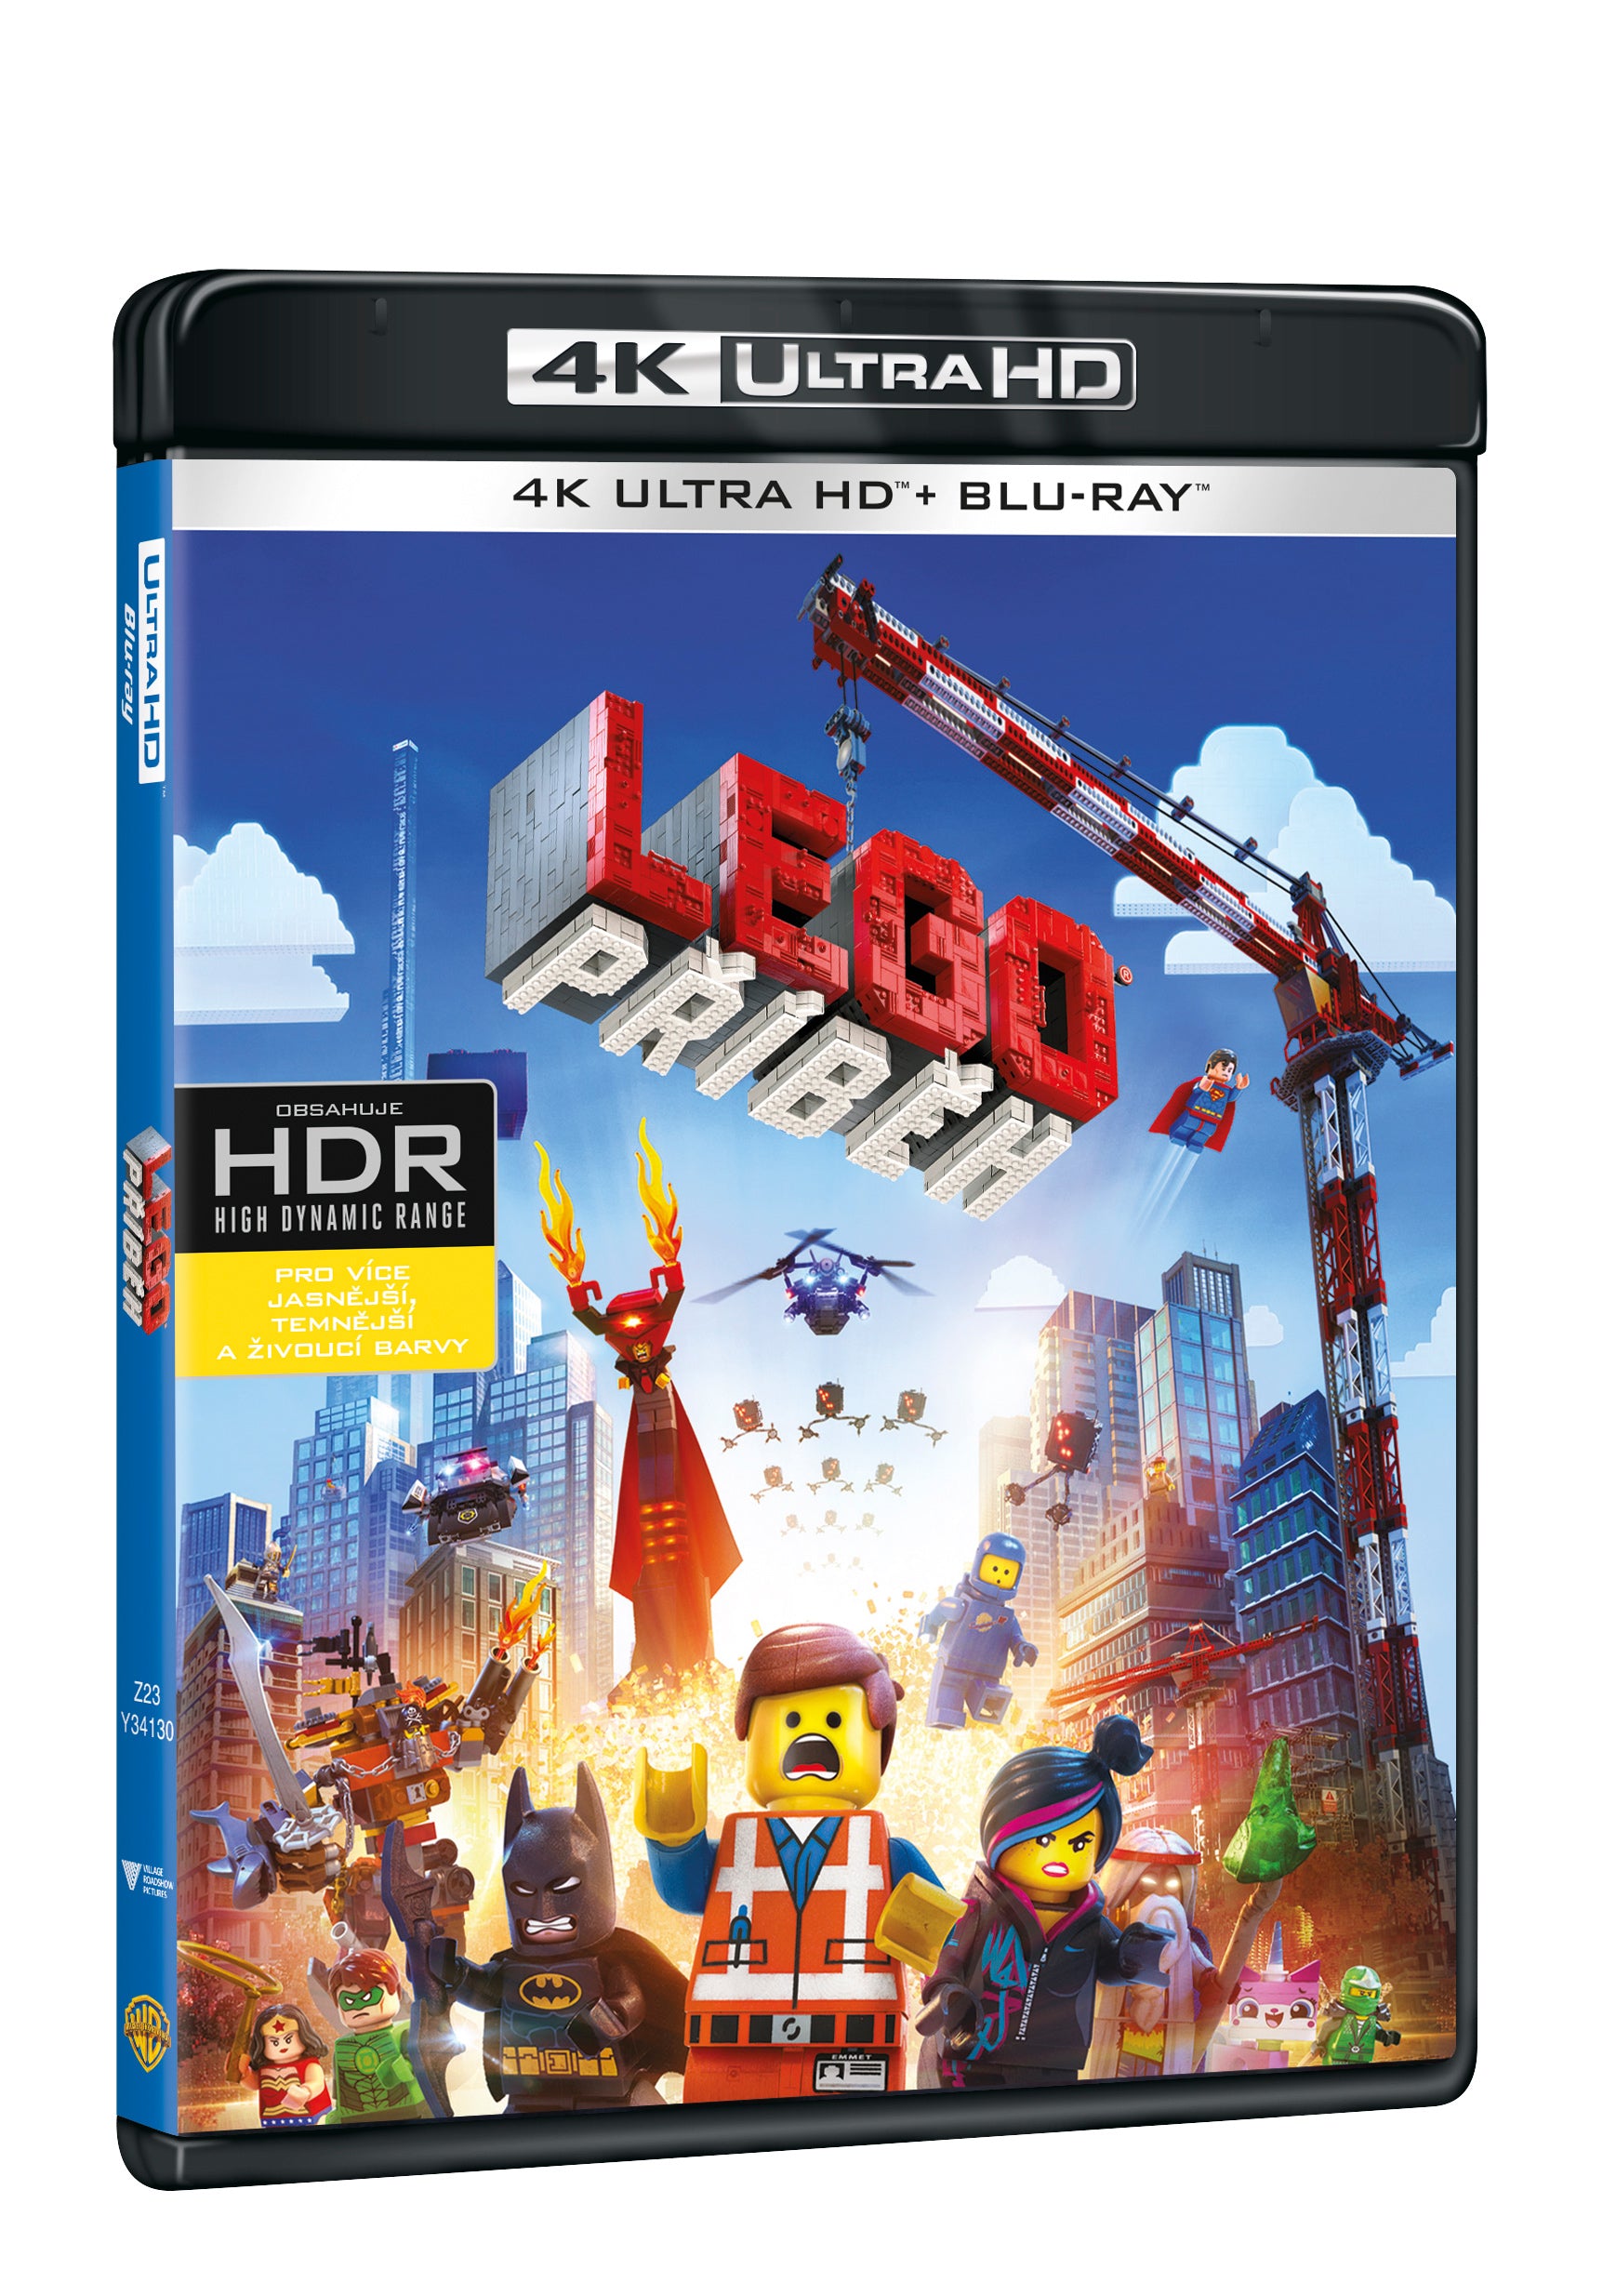 Lego pribeh 2BD (UHD+BD) / The Lego Movie - Czech version